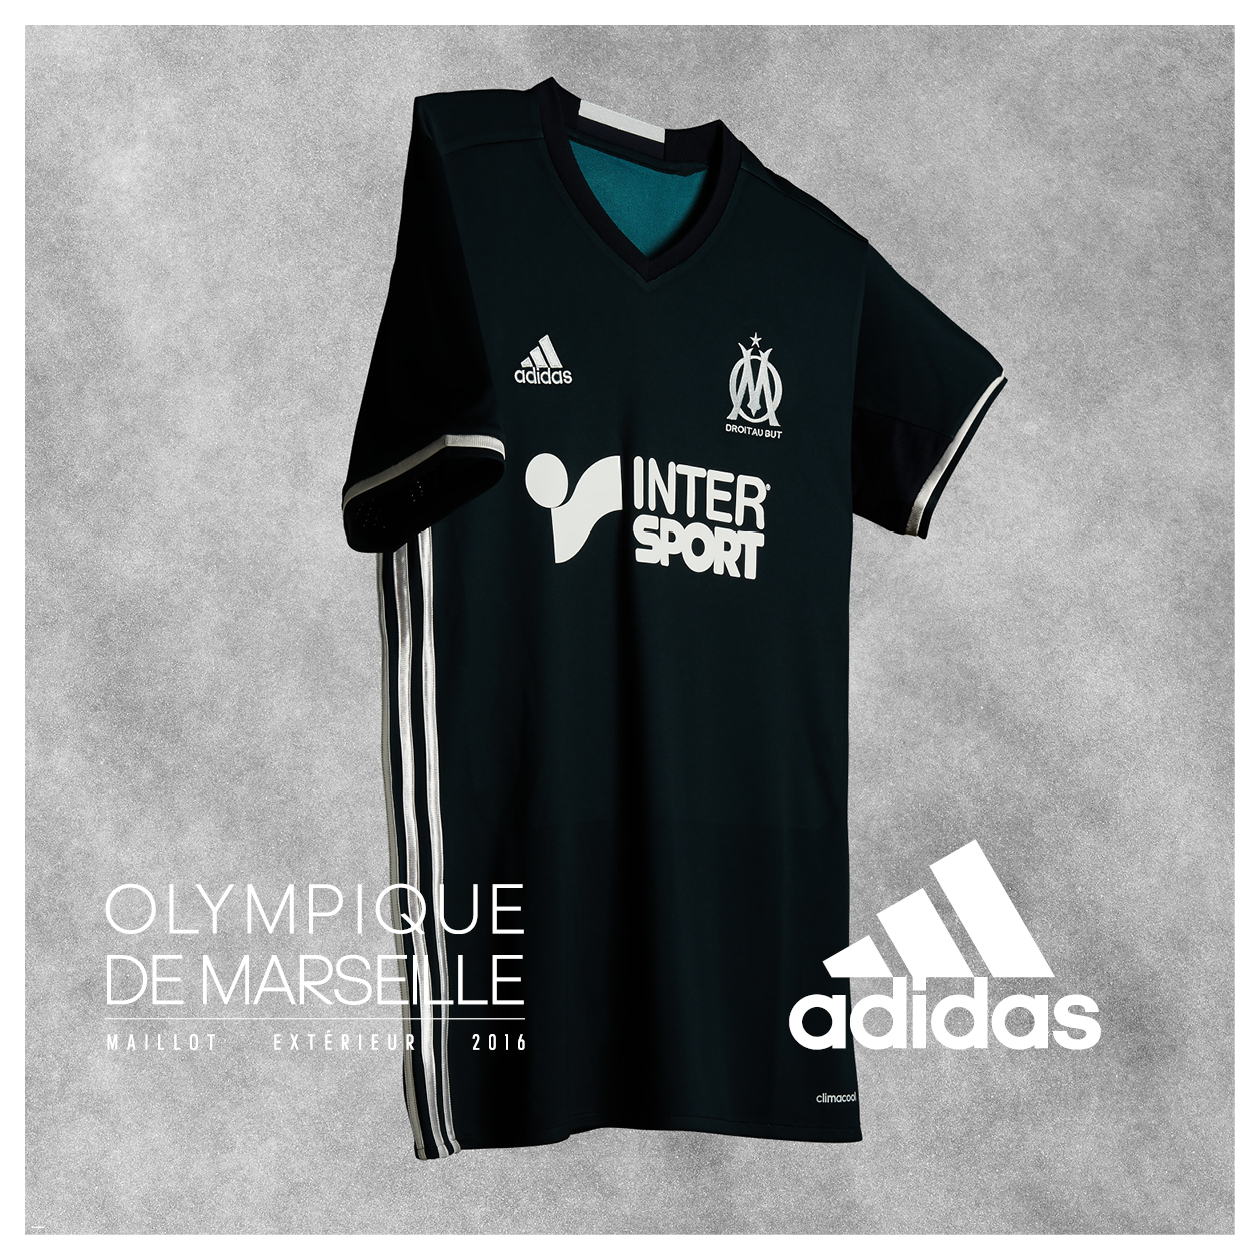 Nouveau maillot extérieur OM 2016-2017 adidas football bleu marine noir